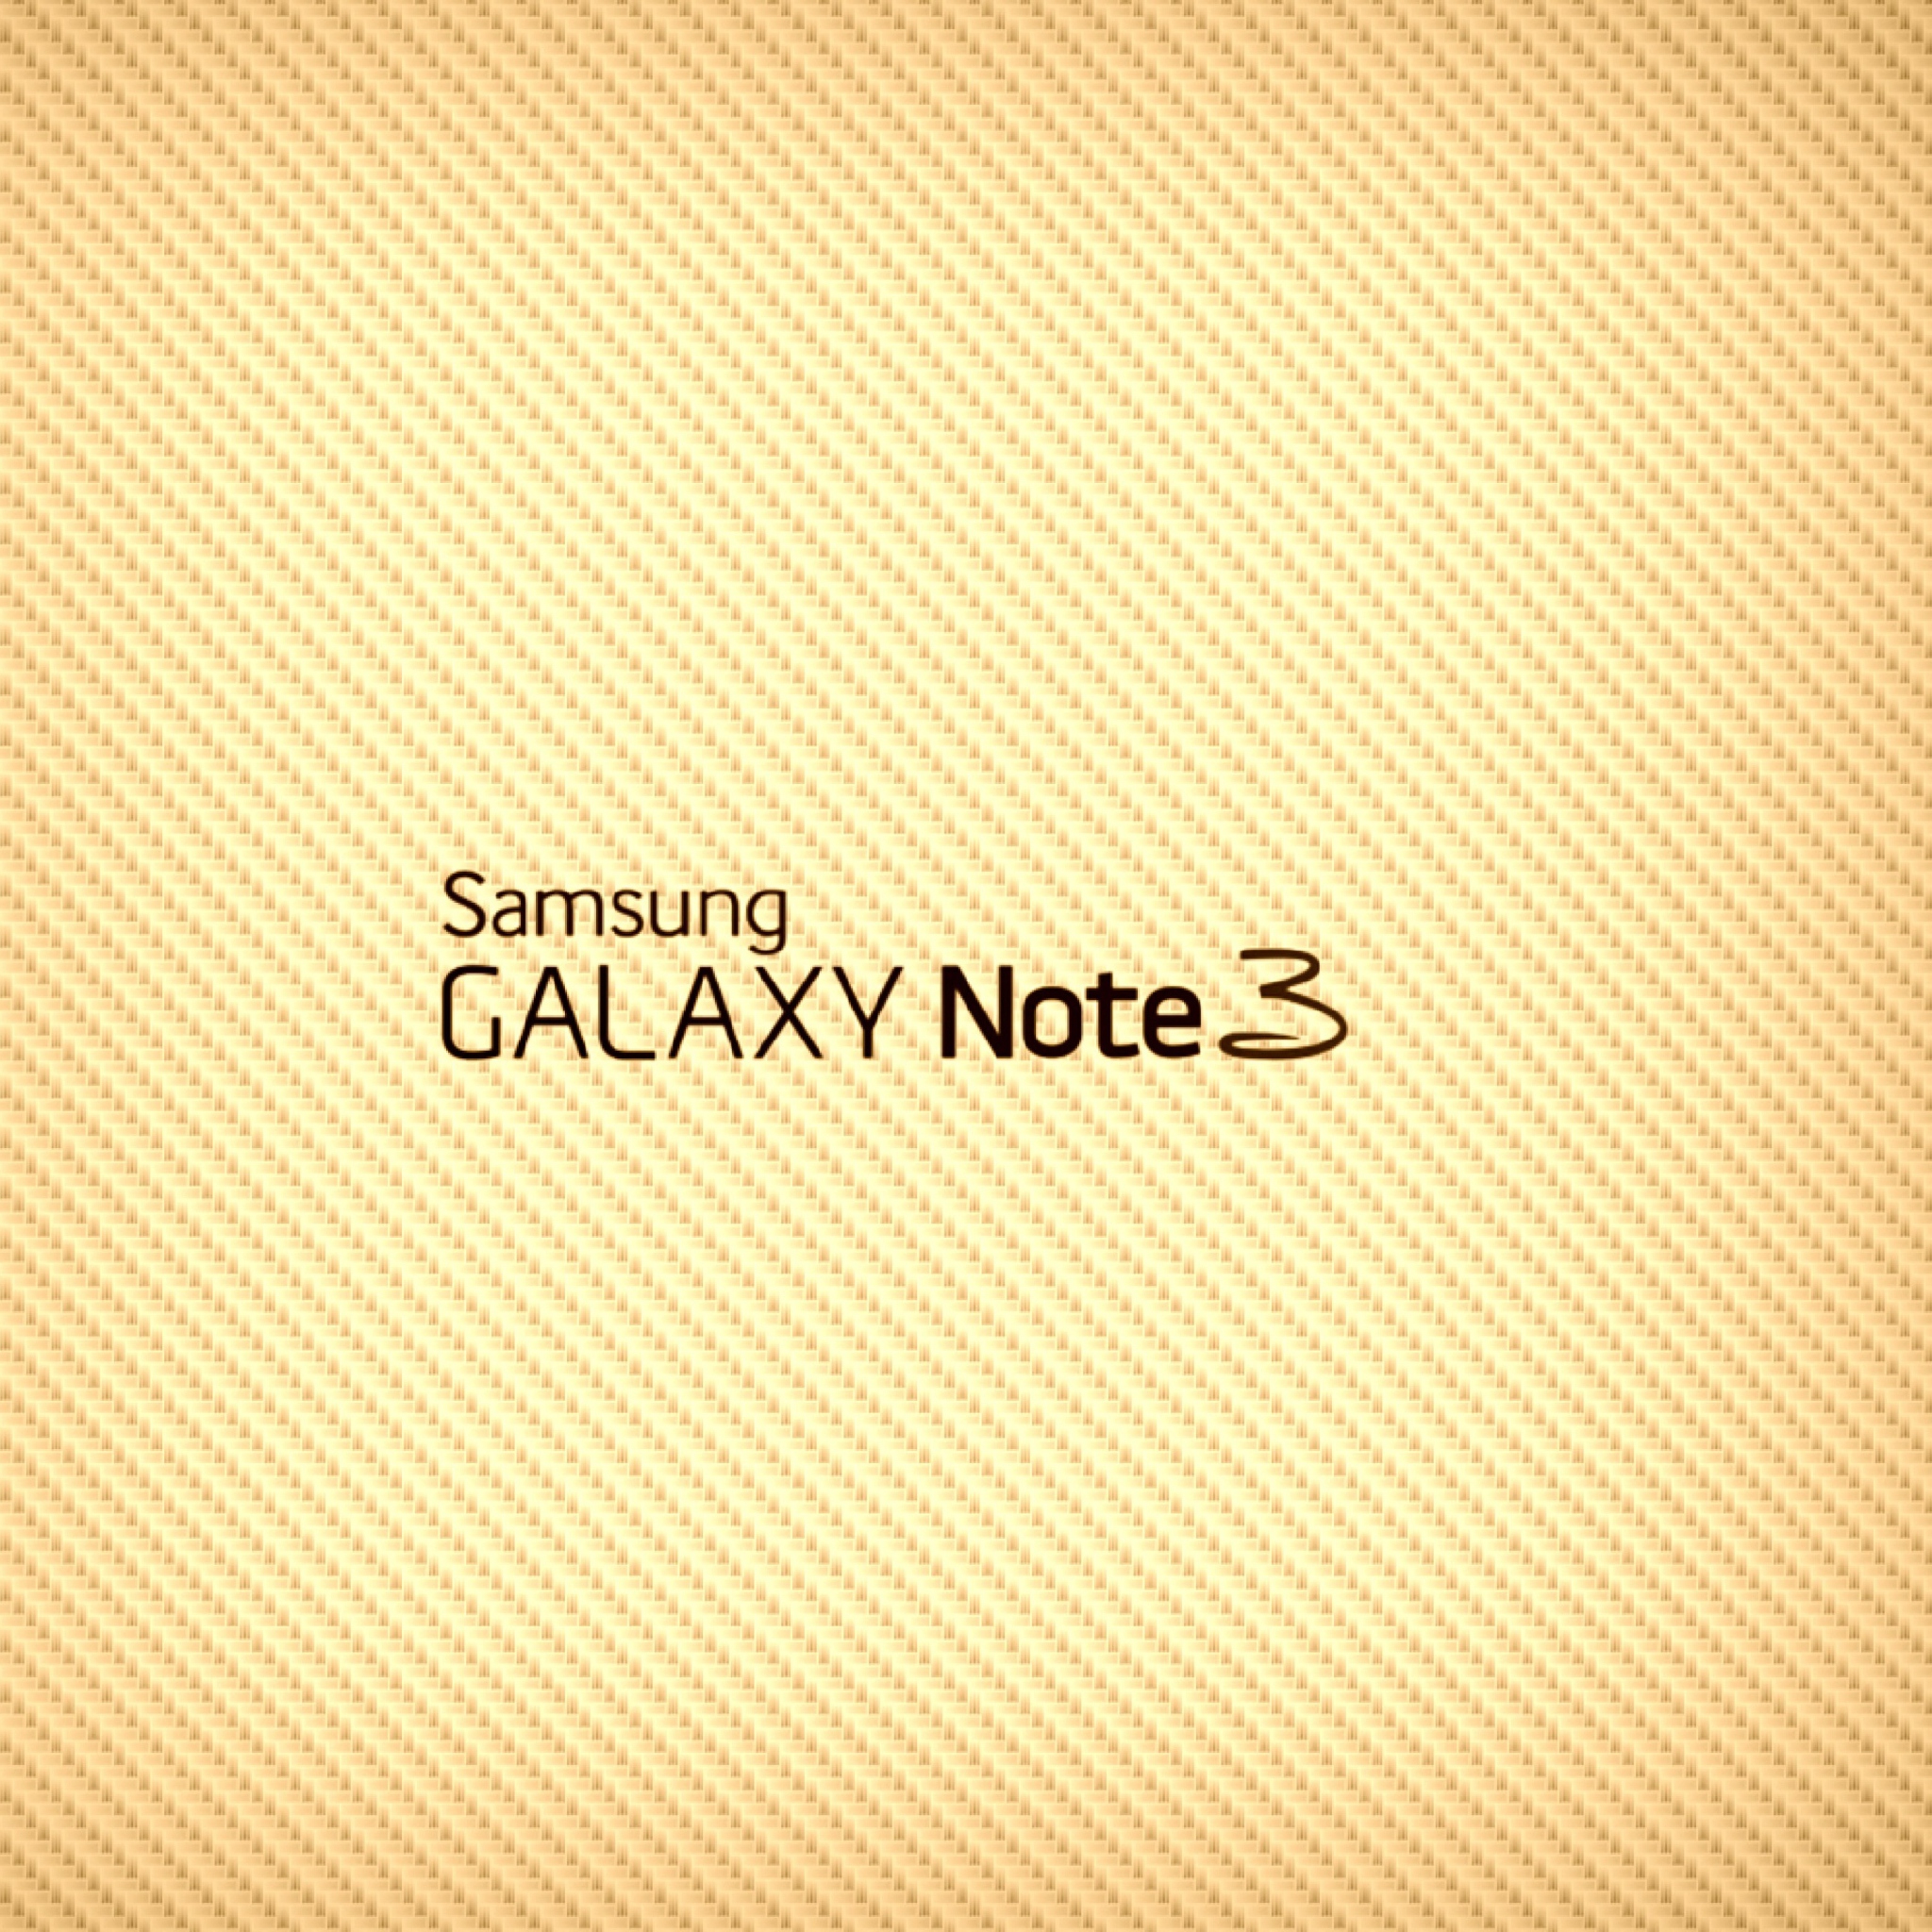 Sfondi Samsung Galaxy Note 3 Gold 2048x2048